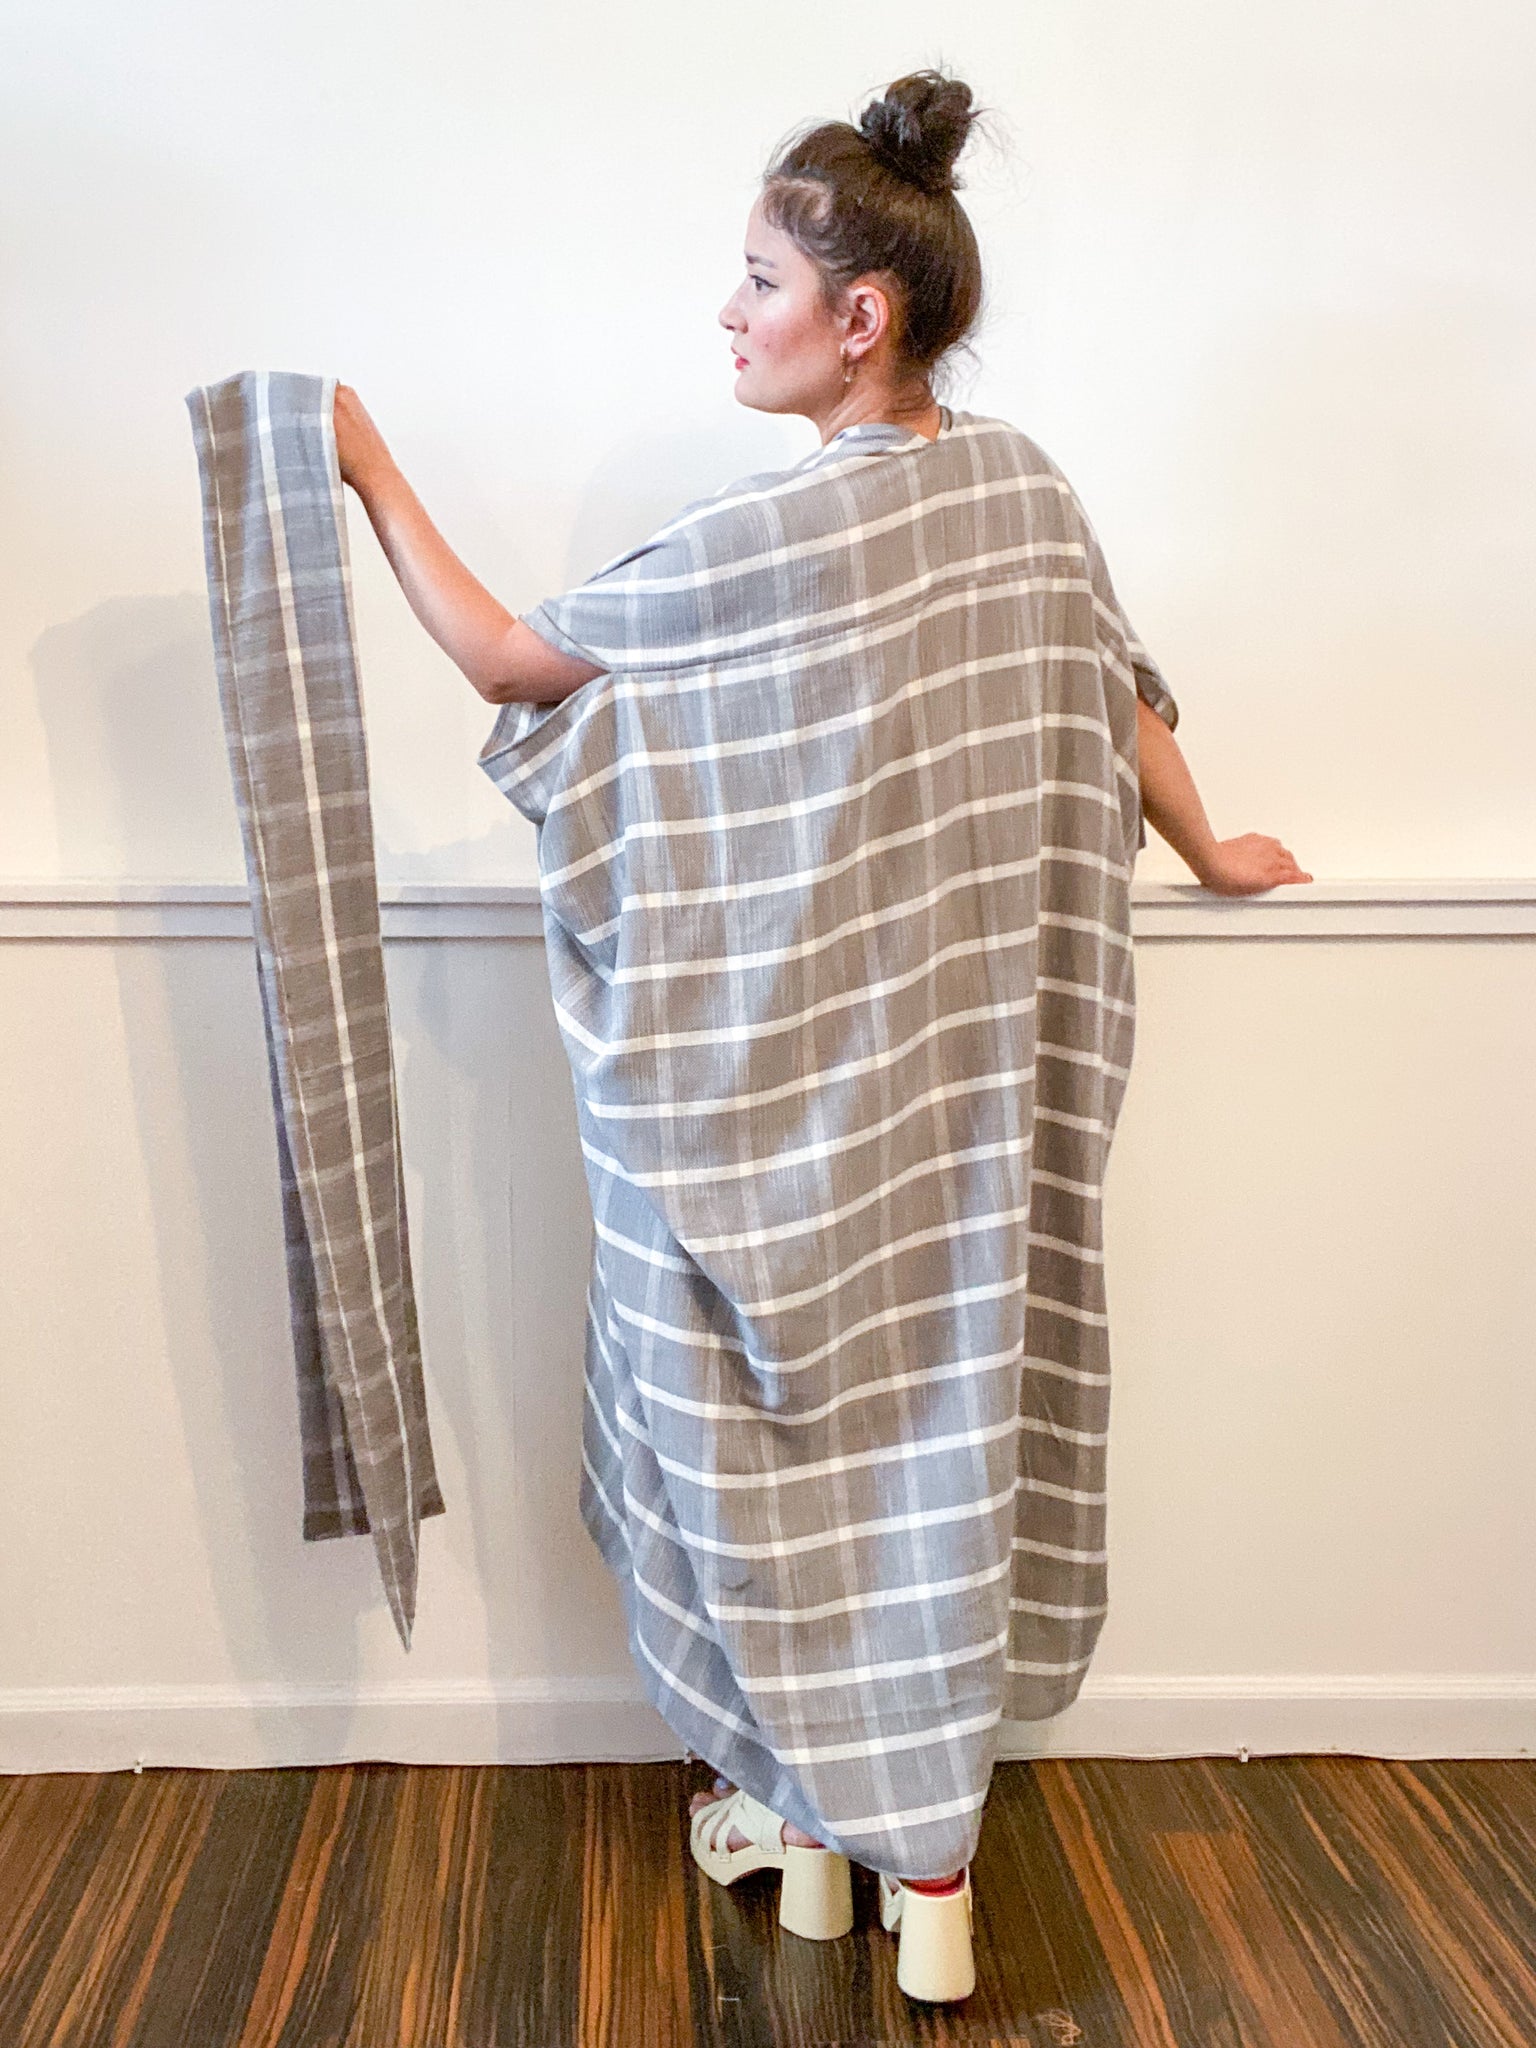 Print High Low Kimono Grey Plaid Rayon Woven